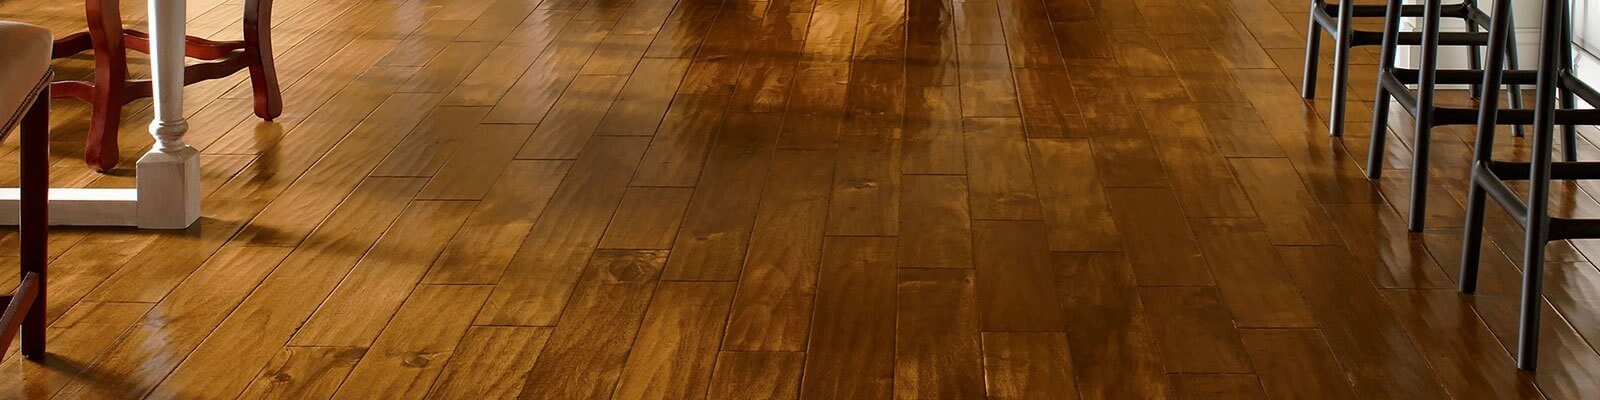 Commercial Hardwood Flooring Header Image